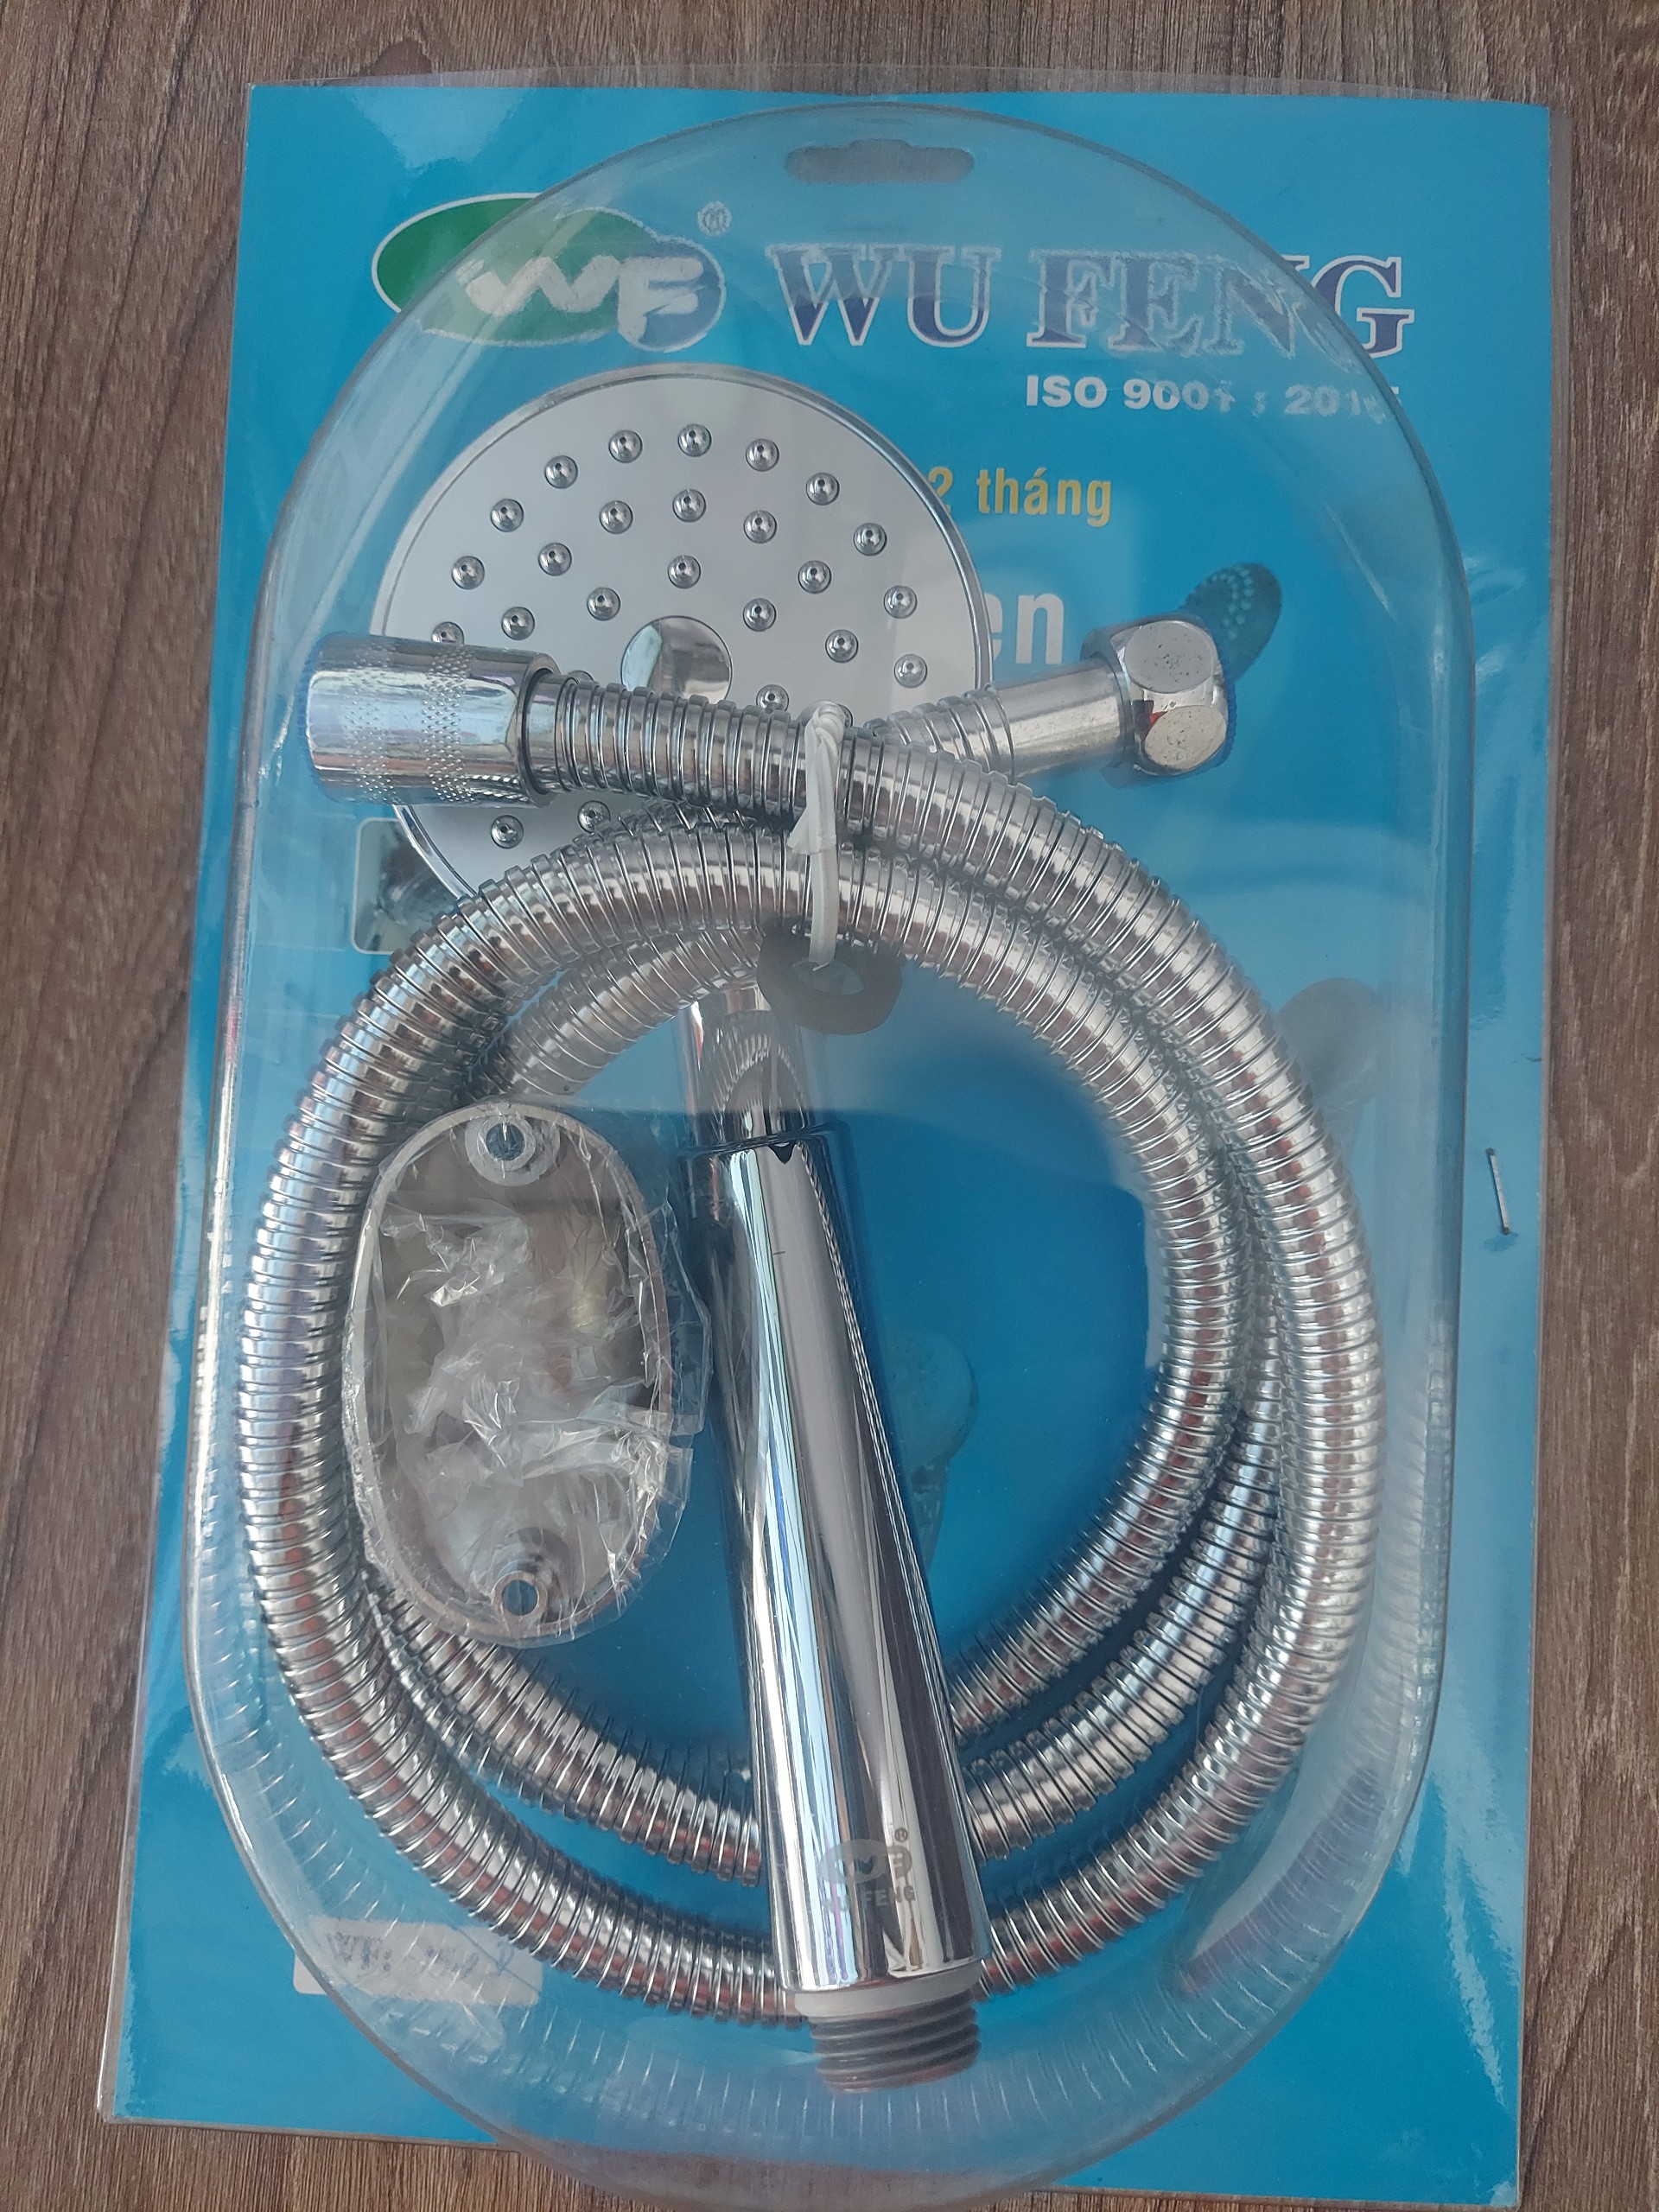  Bộ sen tắm Wufeng WF252P